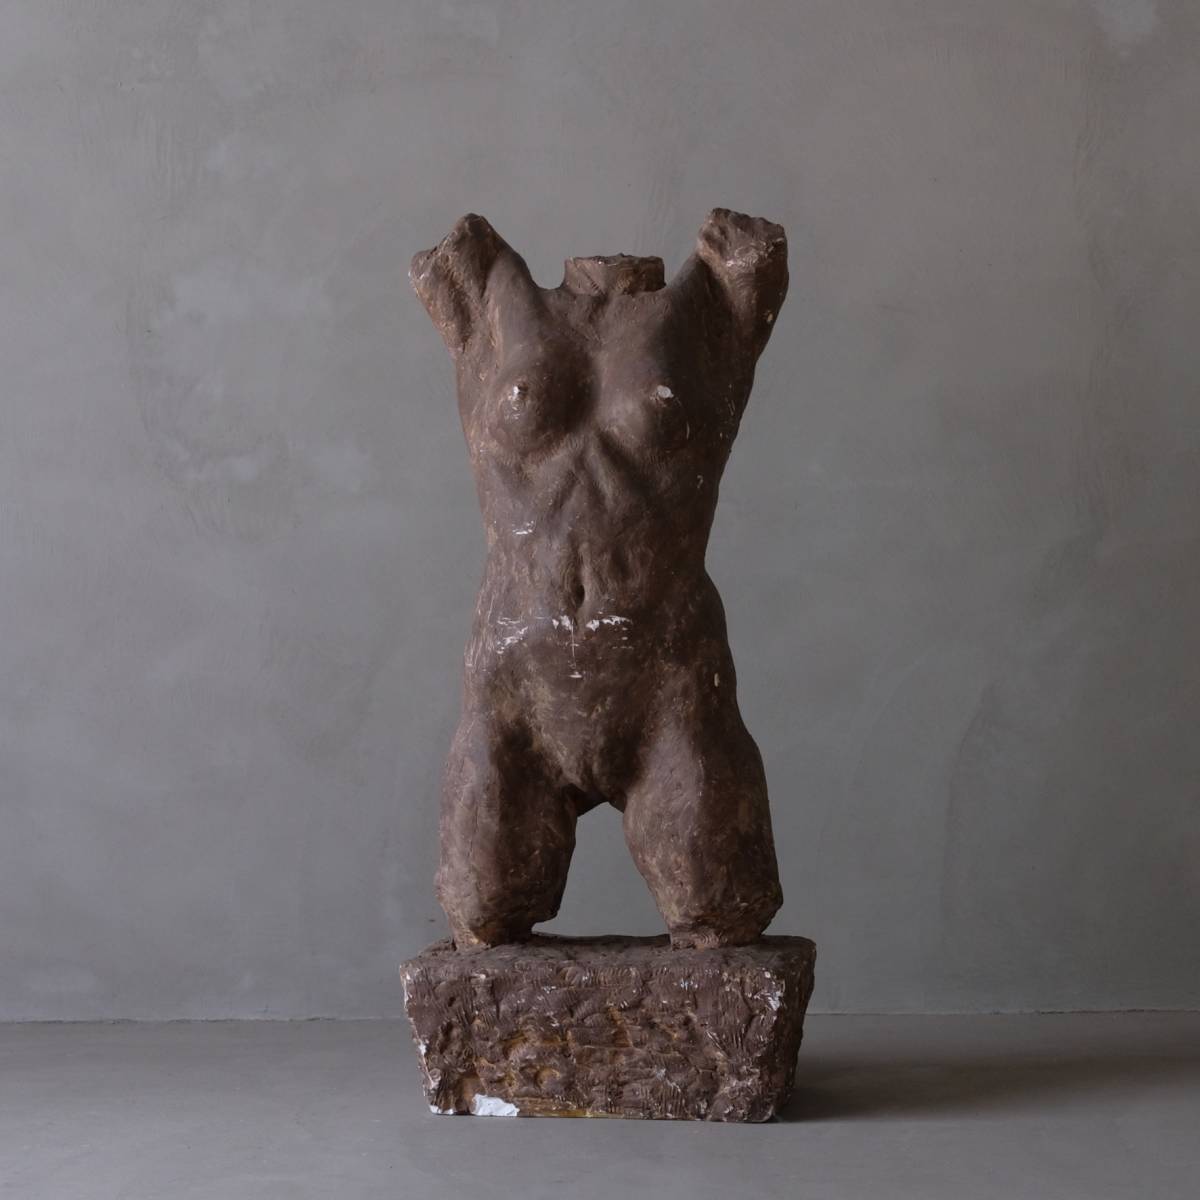 02801 80年代 石膏裸婦像 / 石膏像 女性像 アート 芸術 美術 古道具 レトロ